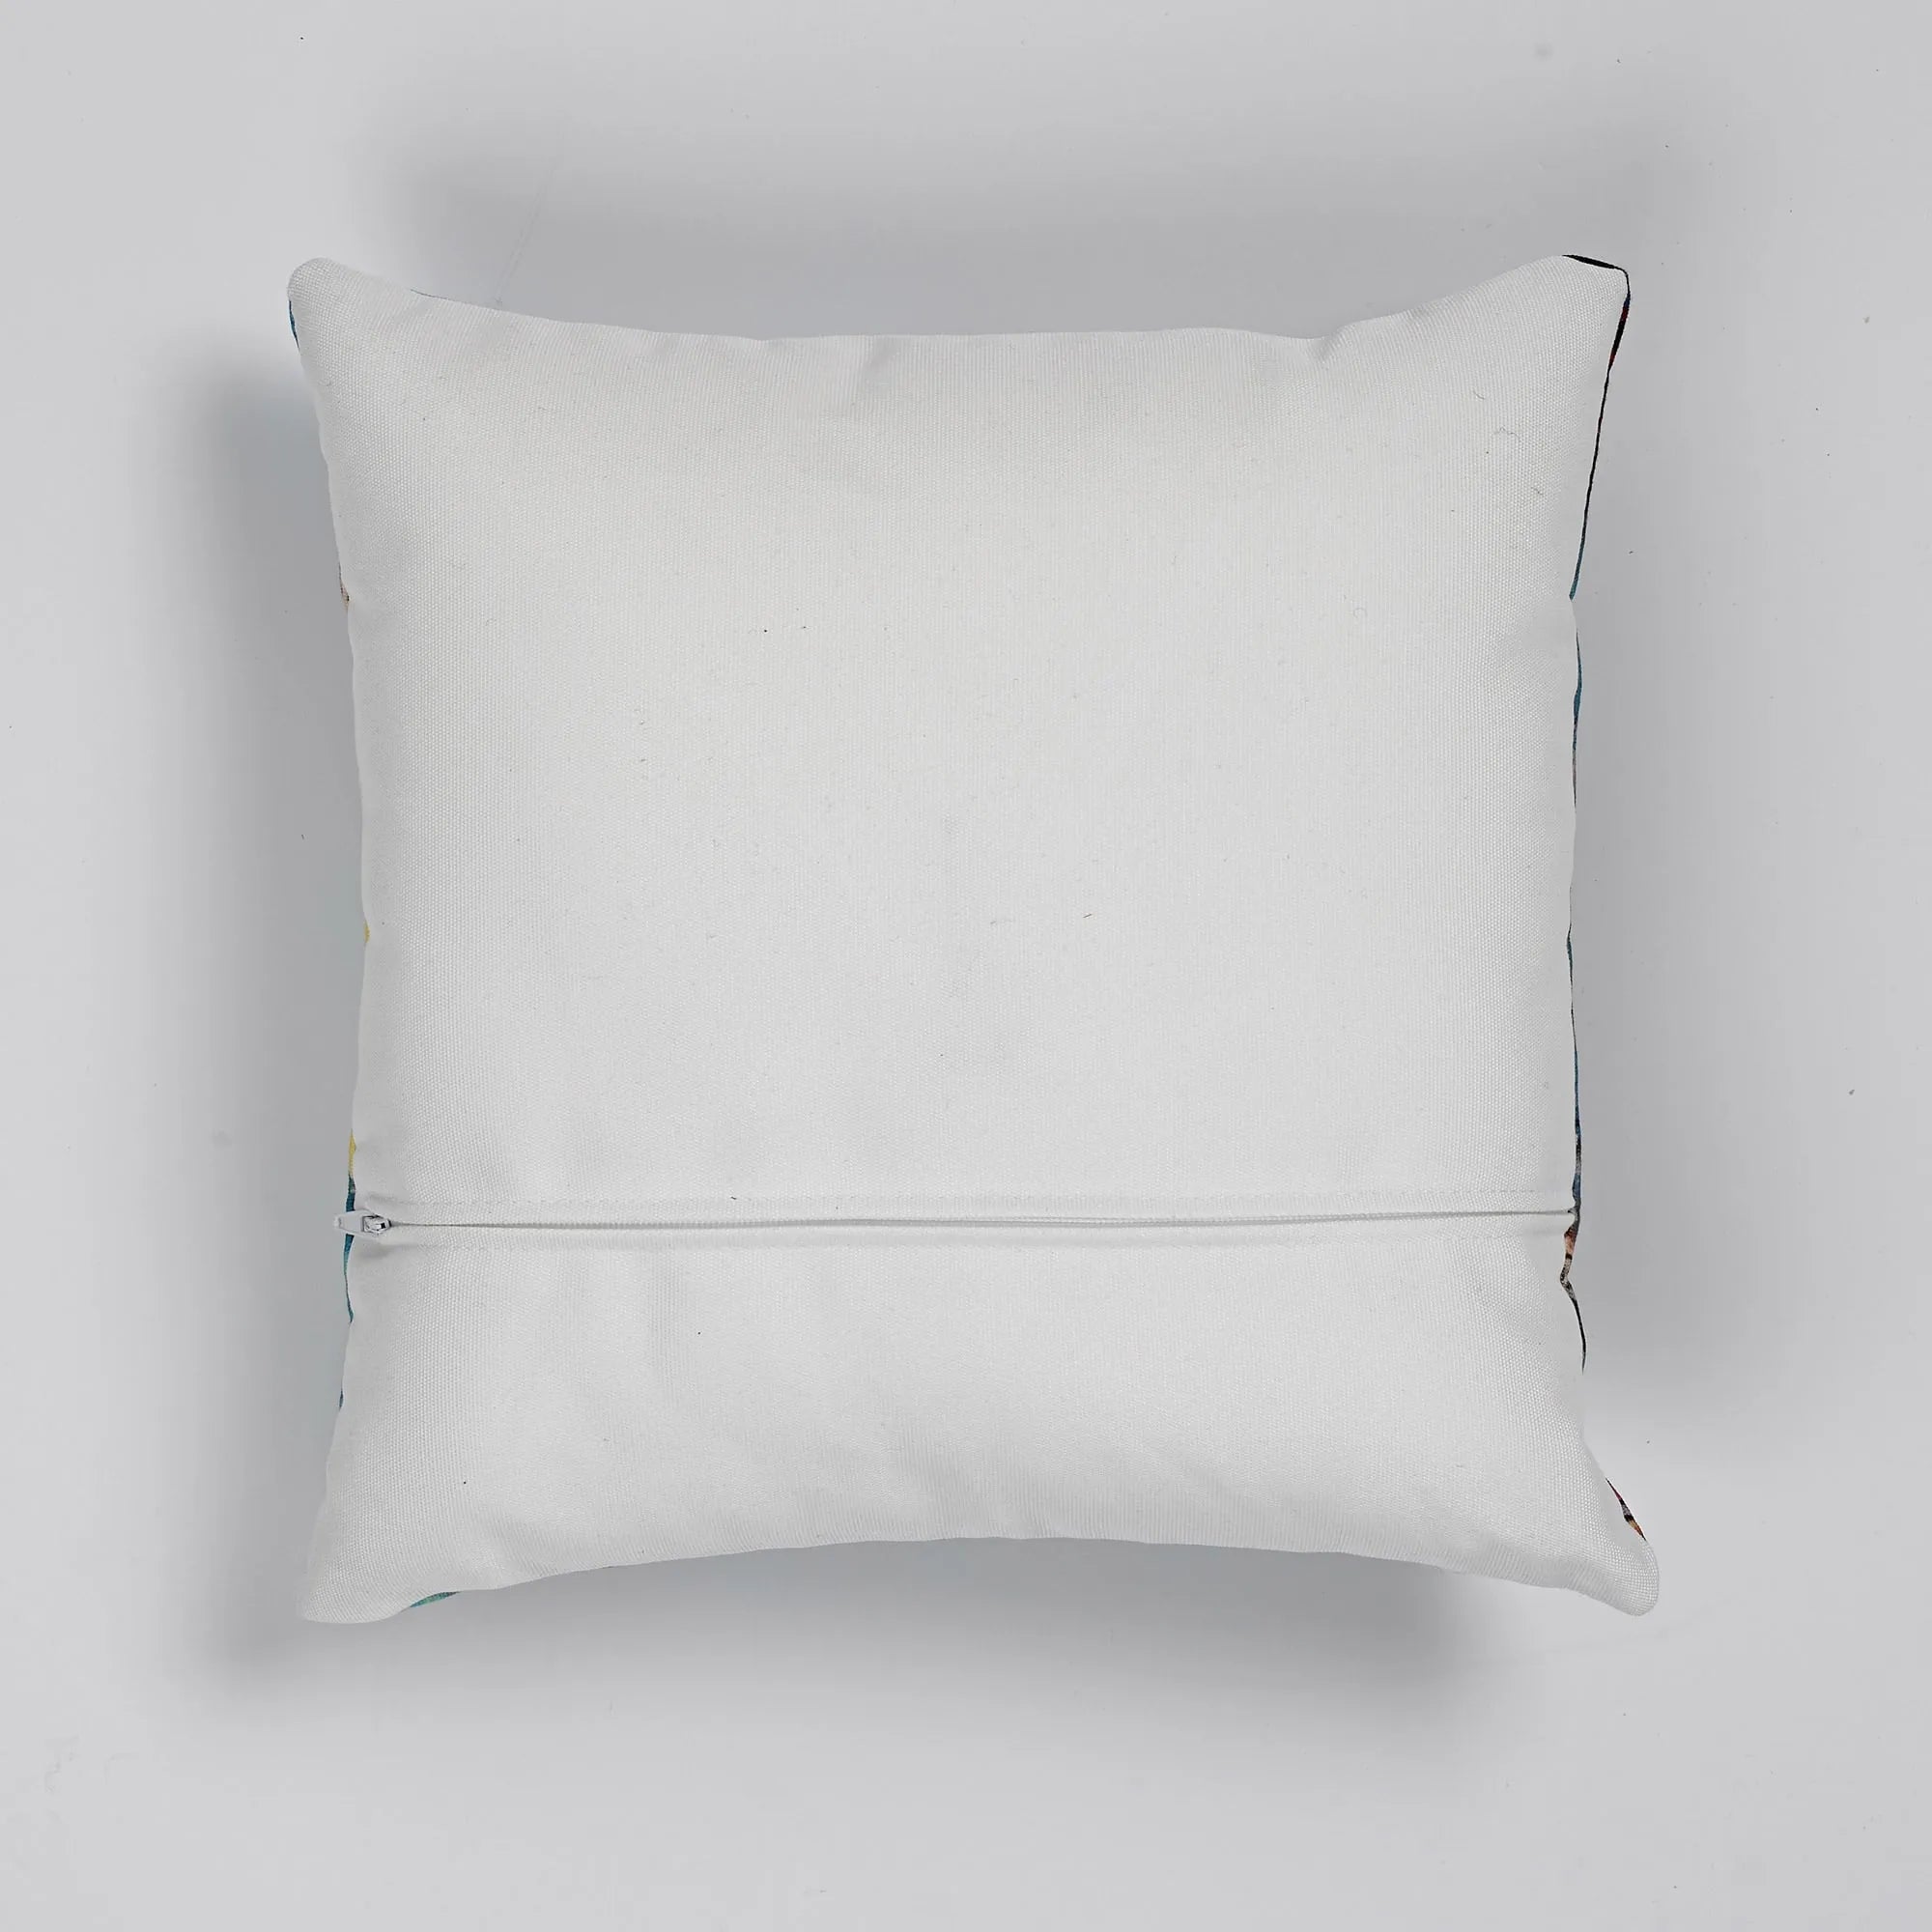 Four Fruits Too - William Morris Cushion - Decorative Throw Pillow - Throw Pillows - Aesthetic Art